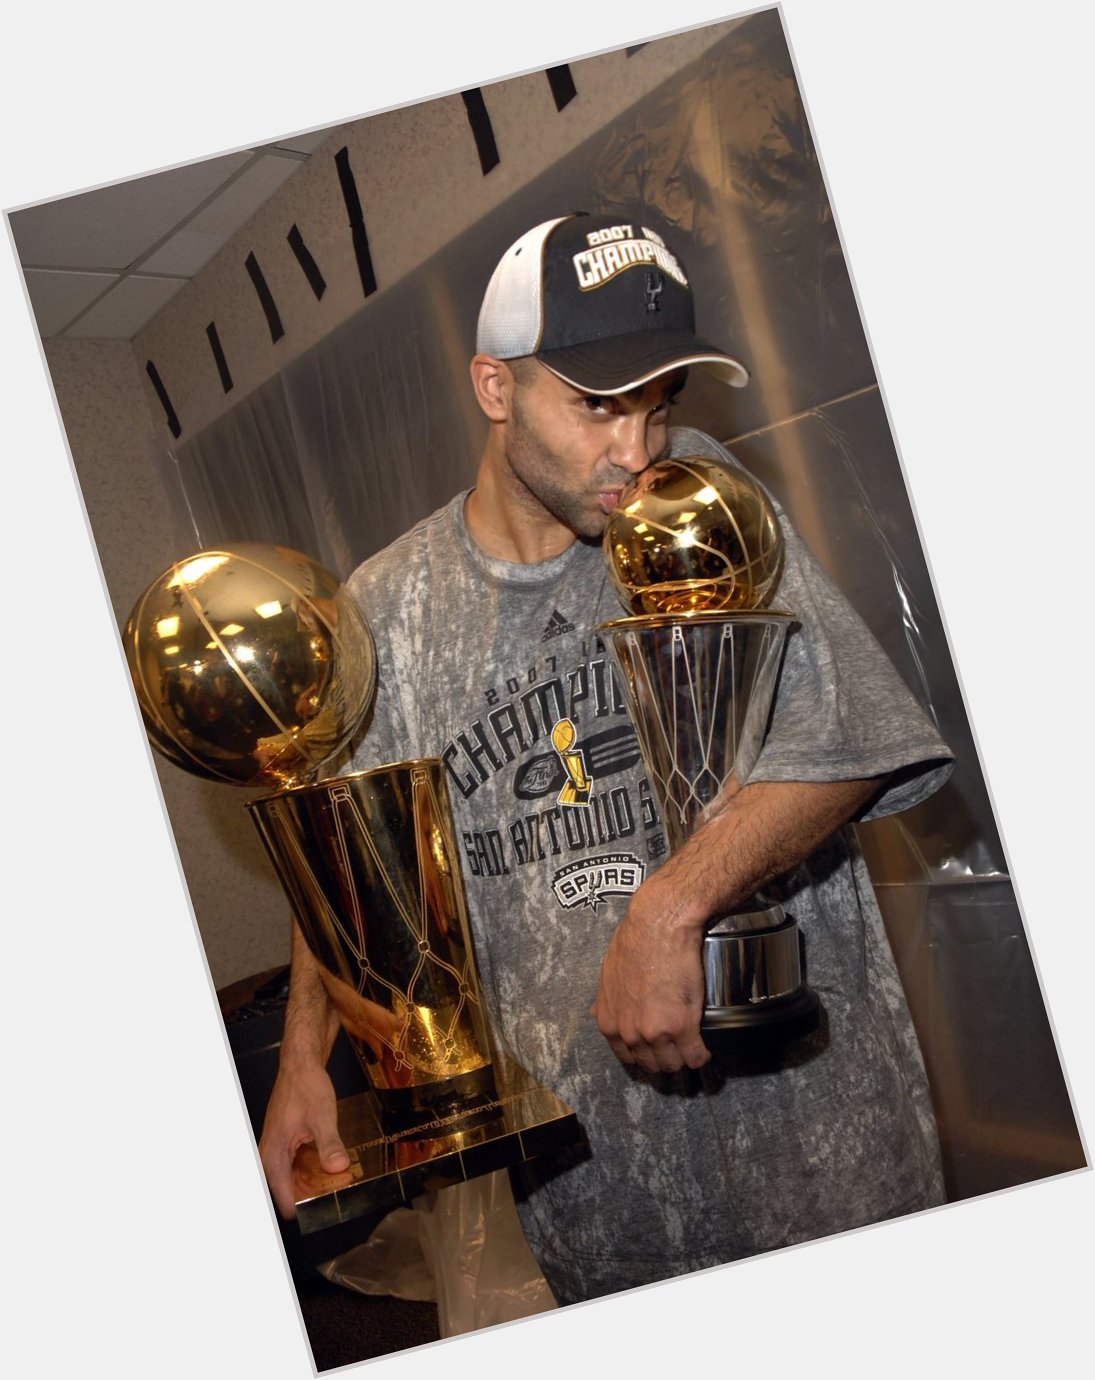 Happy Birthday to Tony Parker!
- 4x NBA Champion - 2007 Finals MVP - 6x All-Star (  